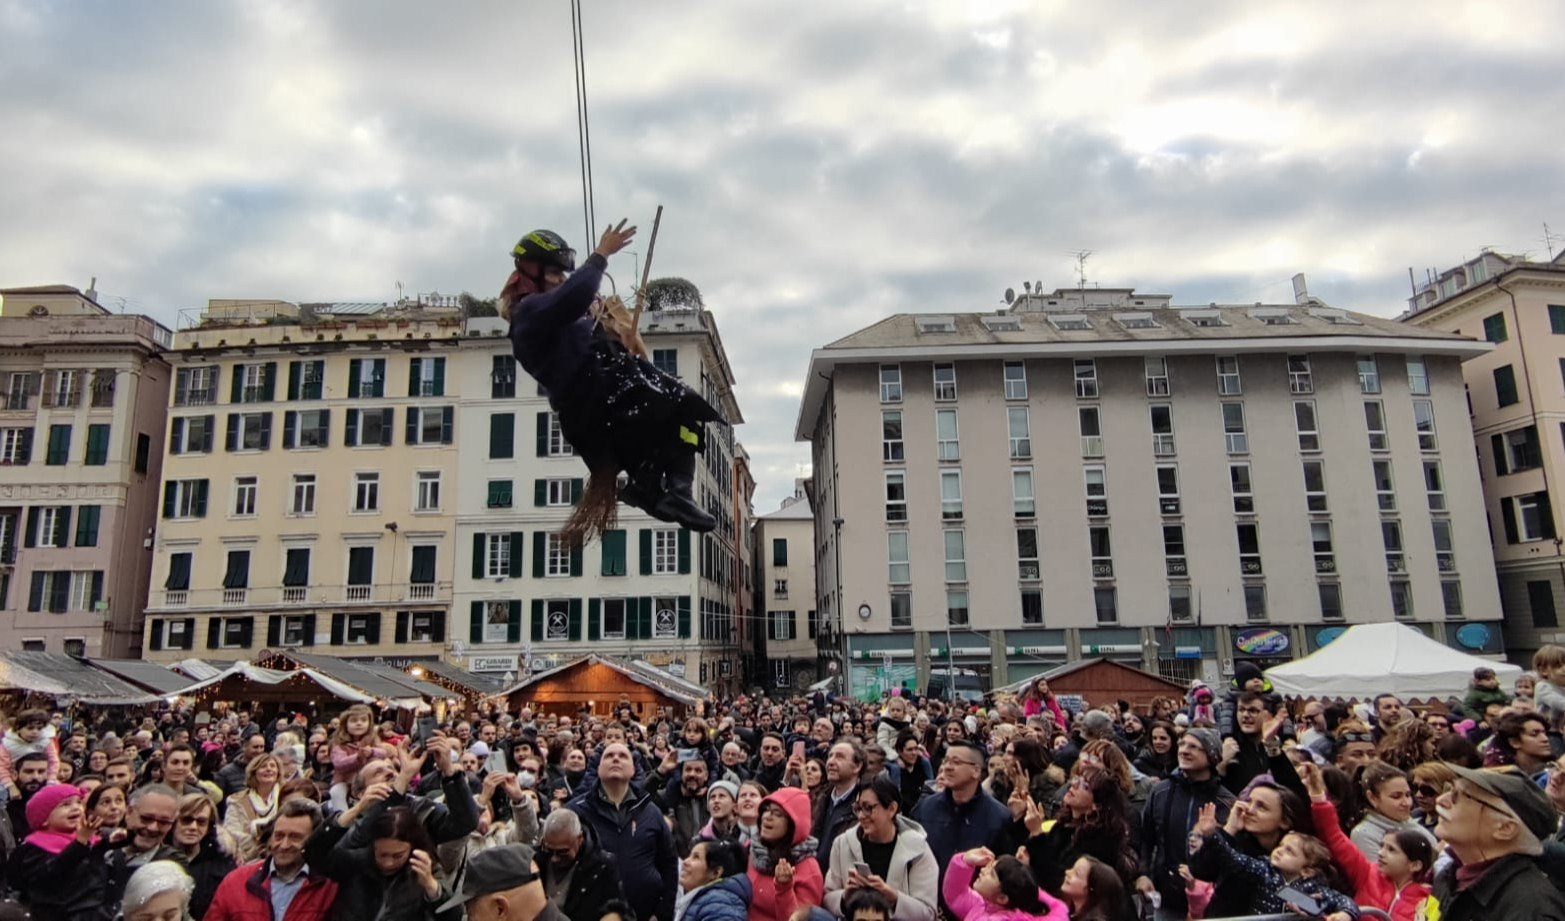 Presepe vivente e befane acrobate: Genova si prepara all'Epifania